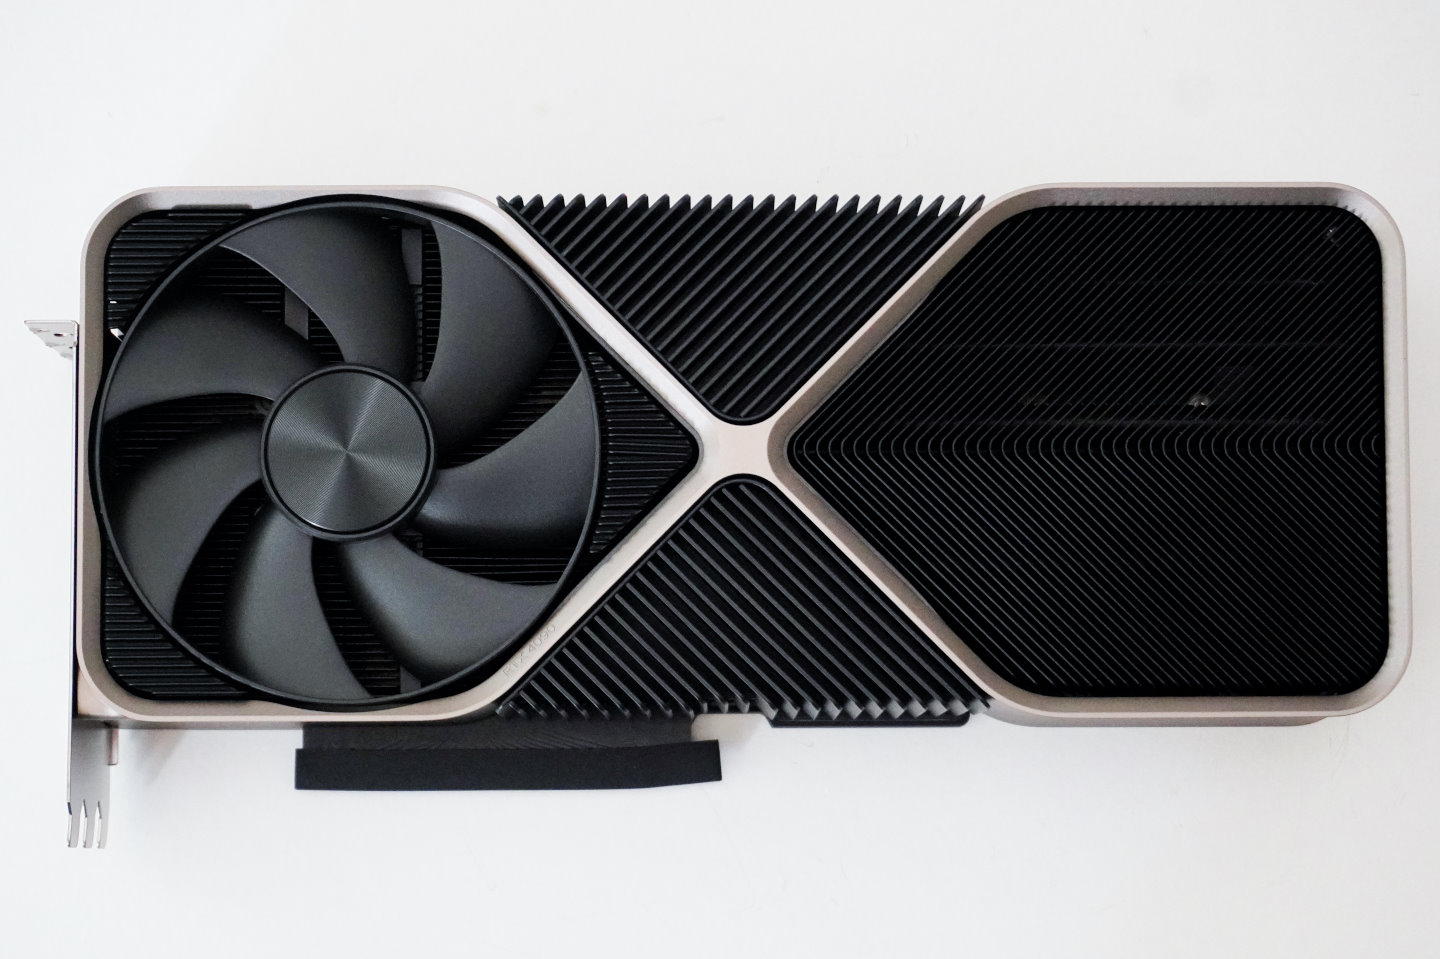 GeForce RTX 4090 Founders Edition散熱器的�計概念與RTX 30世代相近，前端風扇會吸入冷空氣，並由擋板位置排出熱空氣。